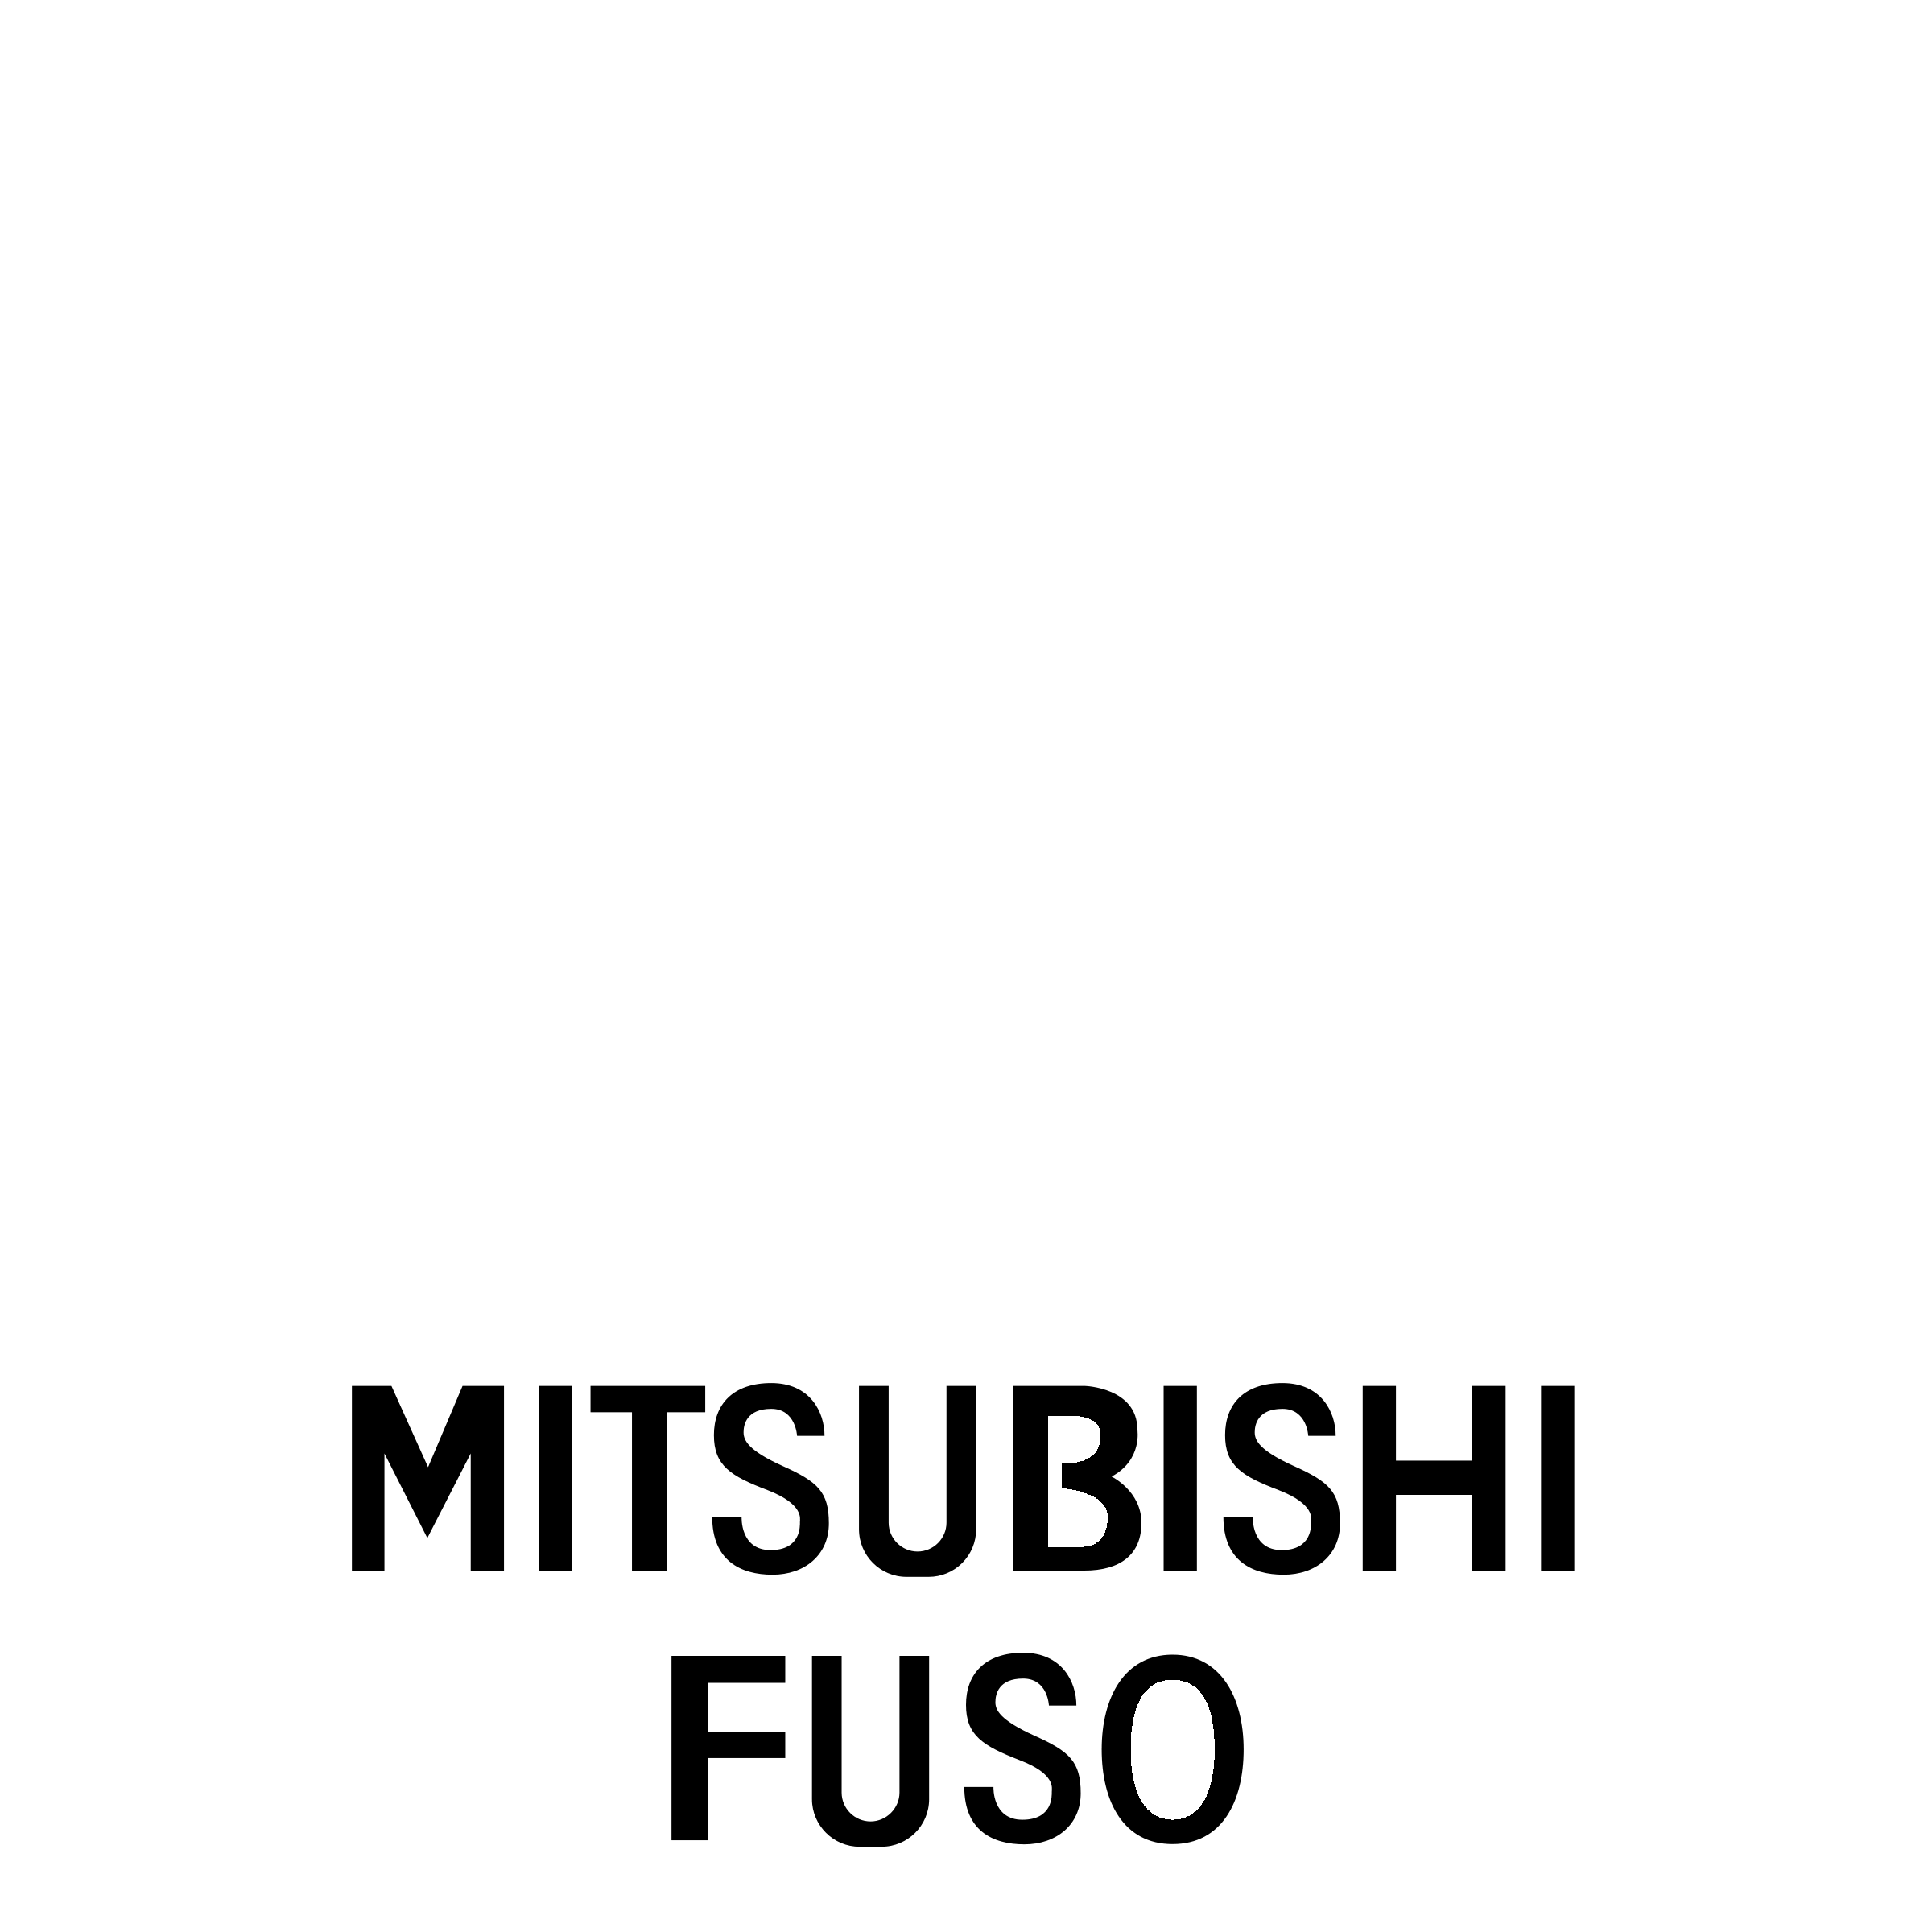 Fuso Logo - Mitsubishi Fuso Logo PNG Transparent & SVG Vector - Freebie Supply